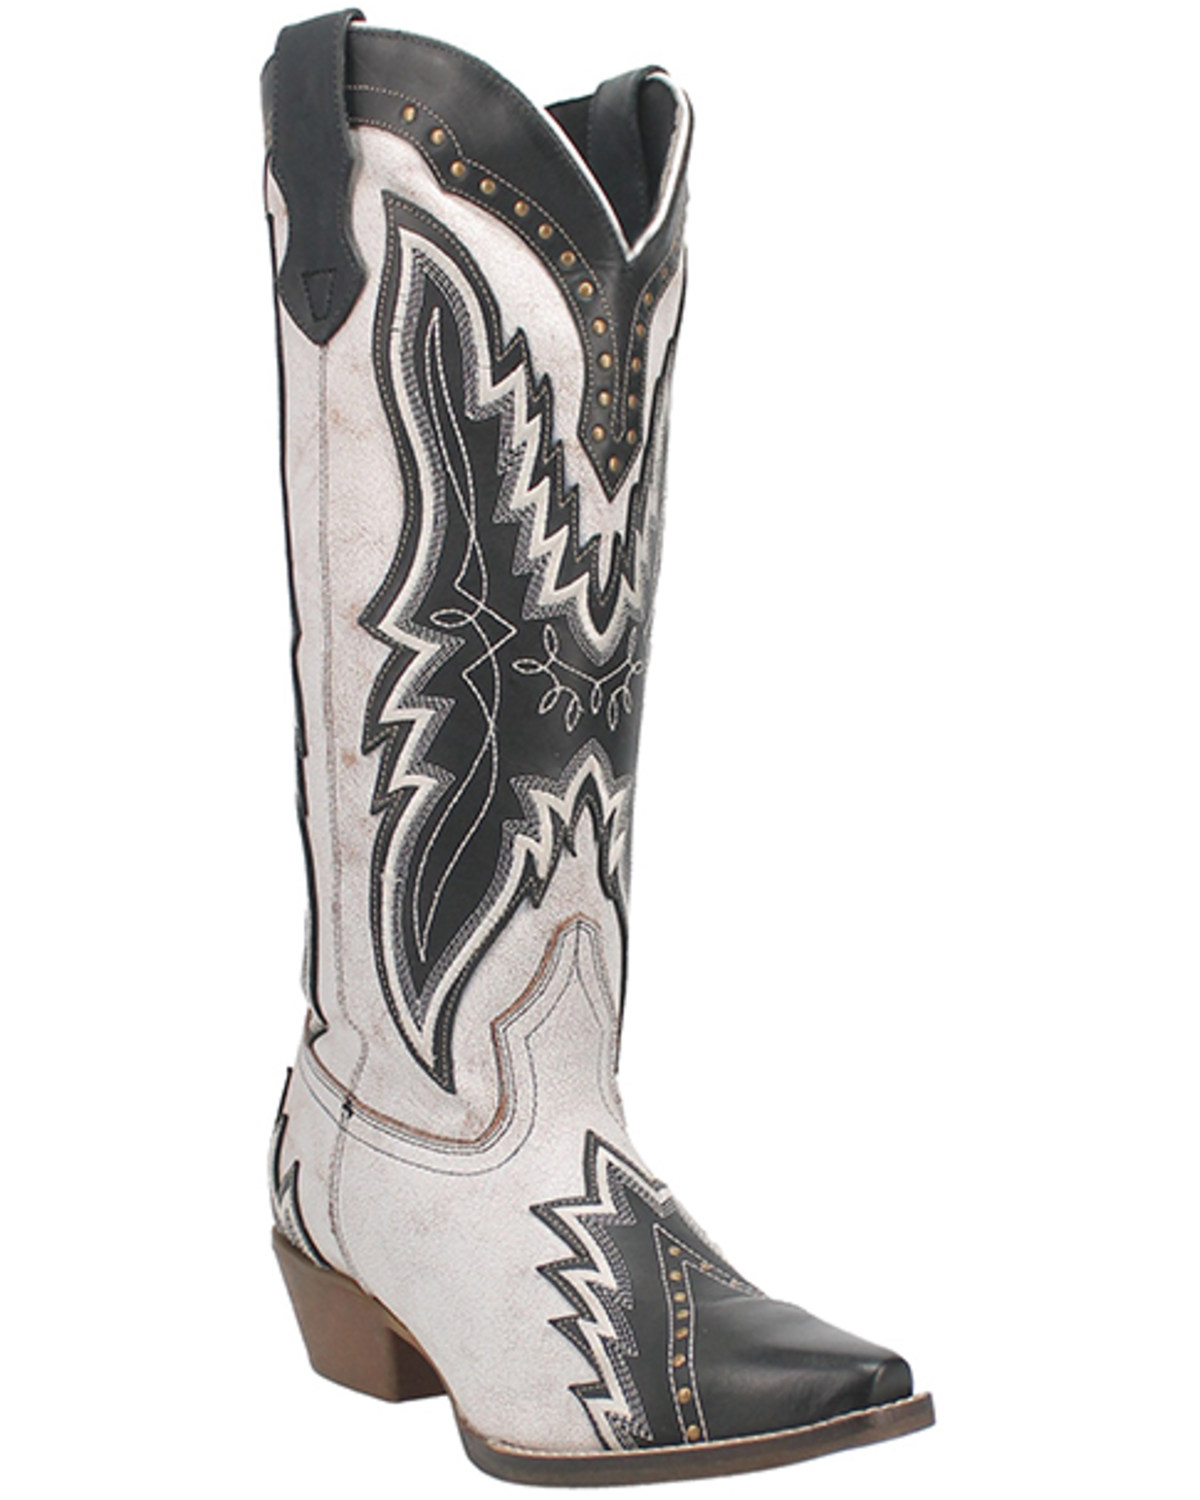 Laredo Women's Shawnee Western Boots - Snip Toe